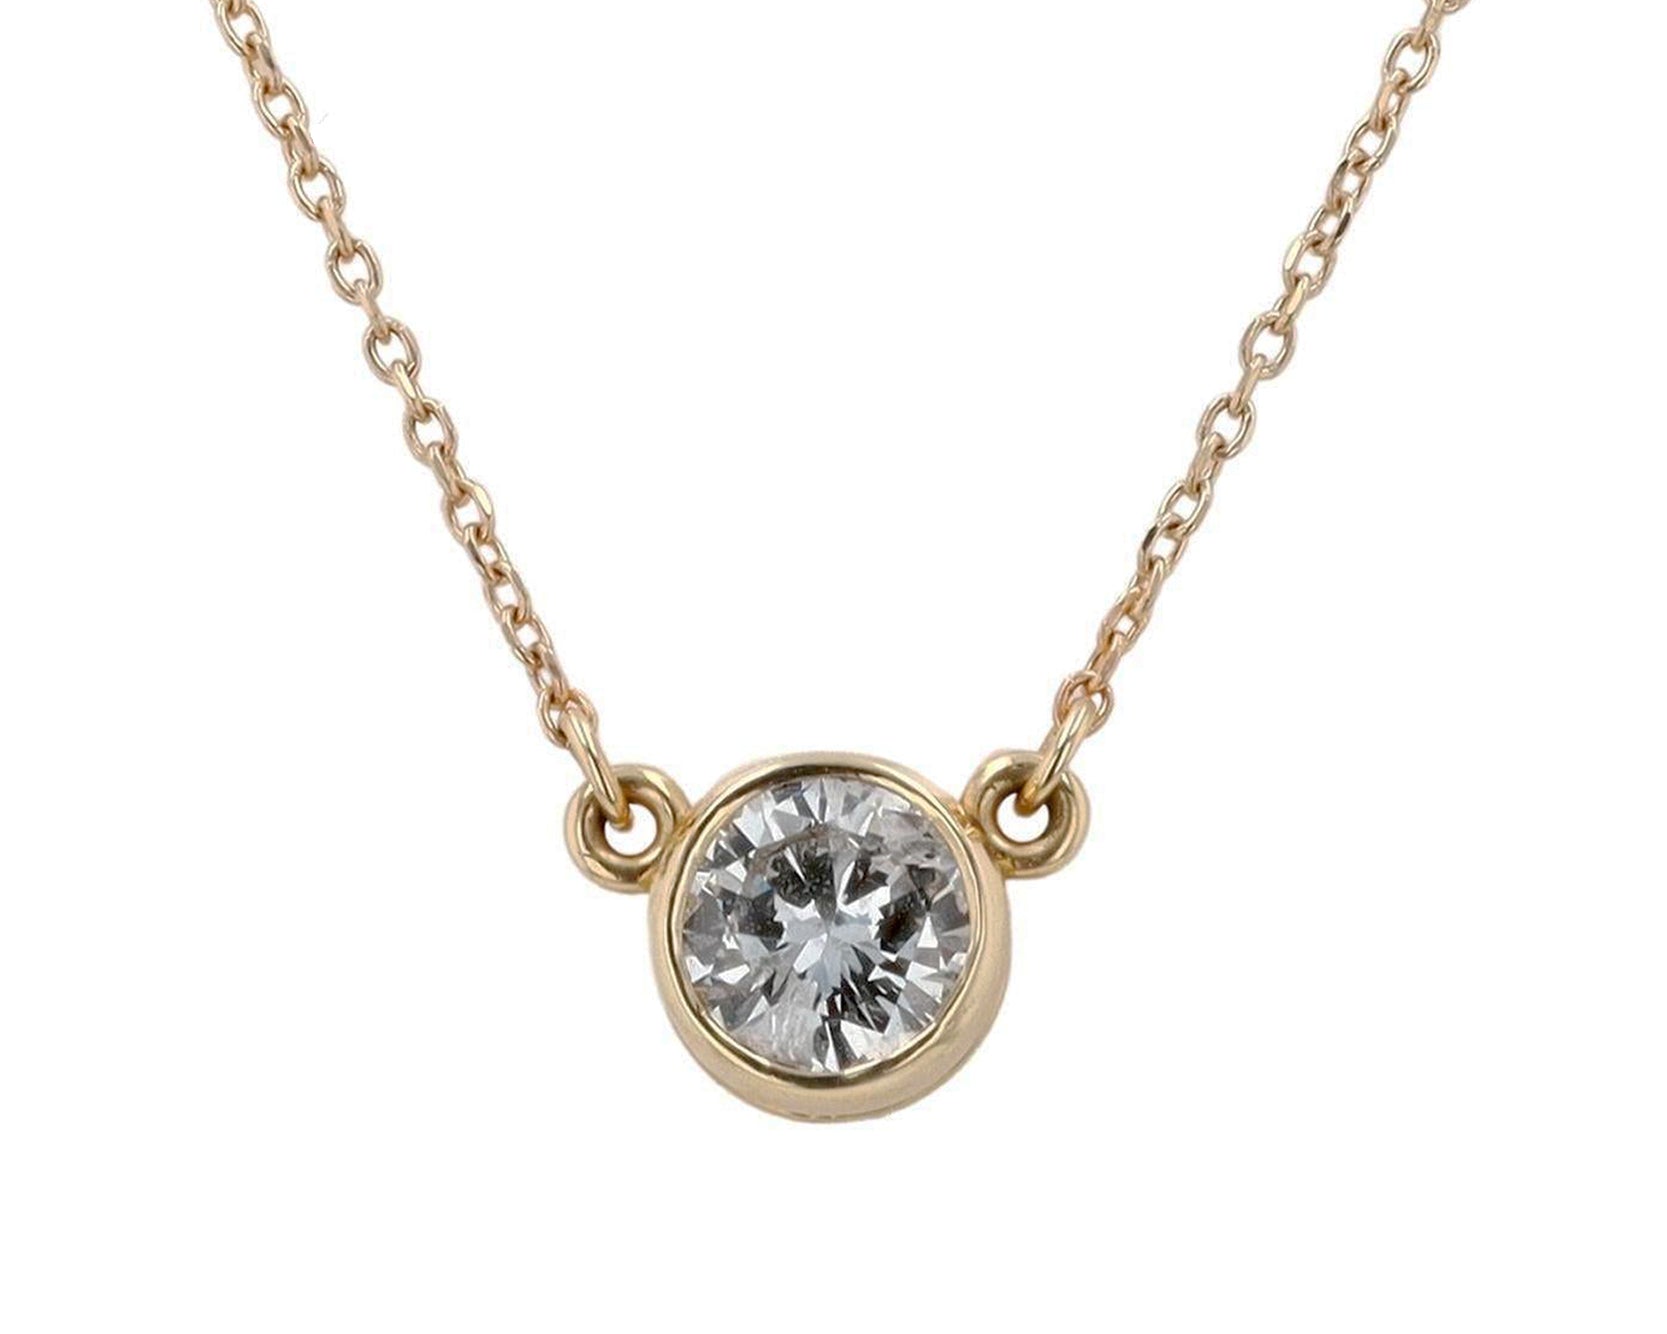 Tiffany Style Necklace